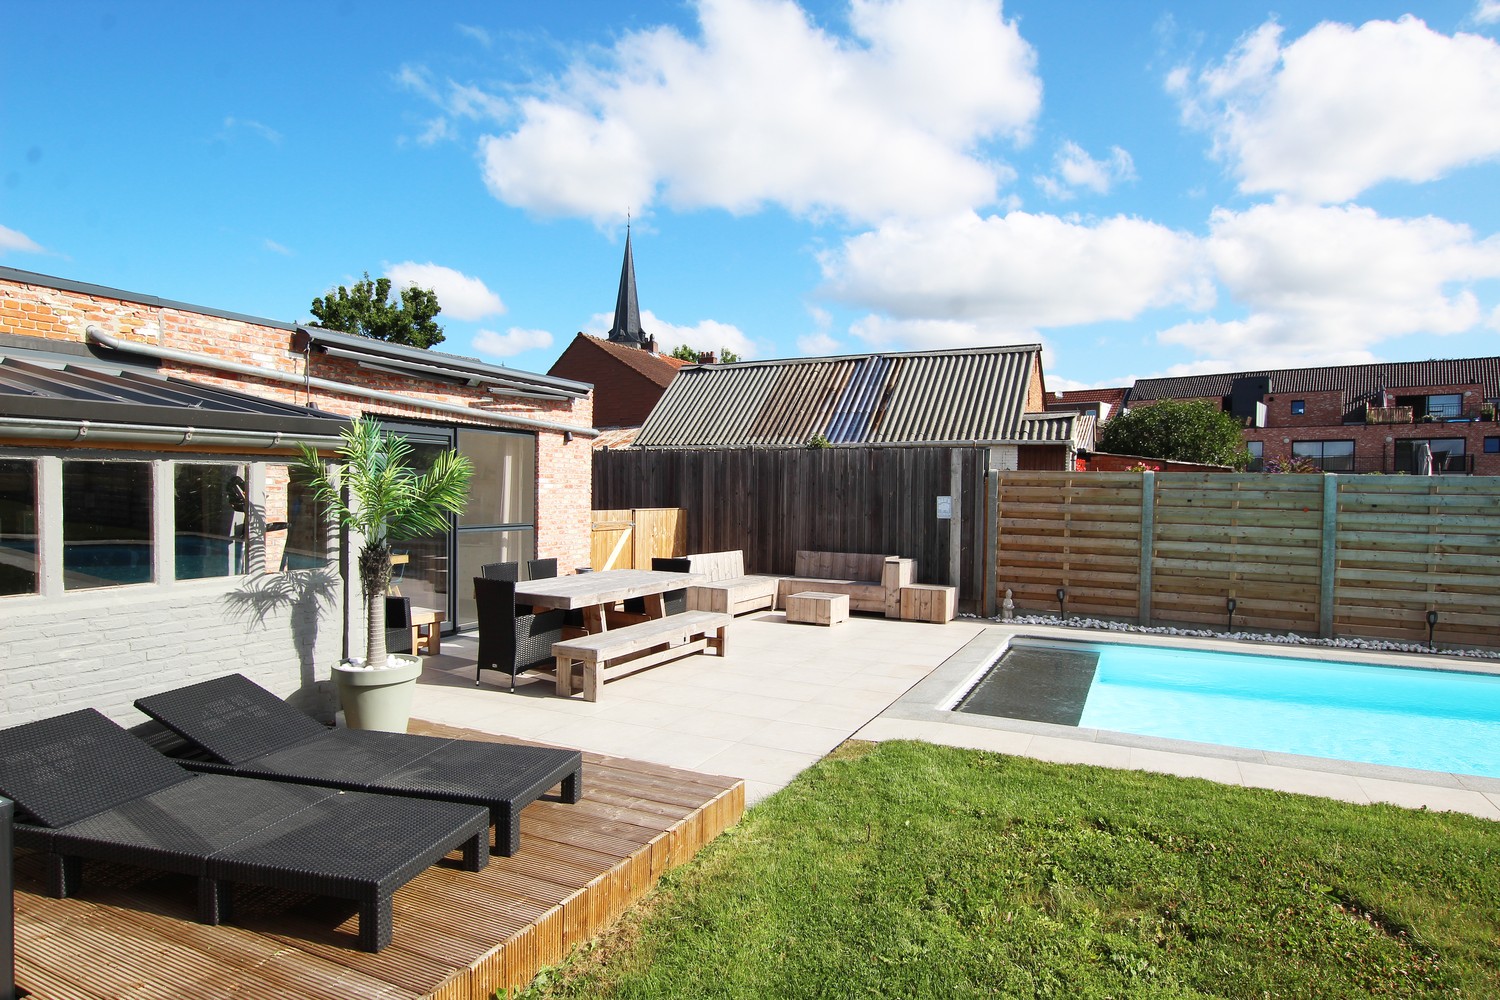 Verrassend ruime woning met riante tuin (774m²) en verwarmd zwembad in hartje Broechem! afbeelding 23